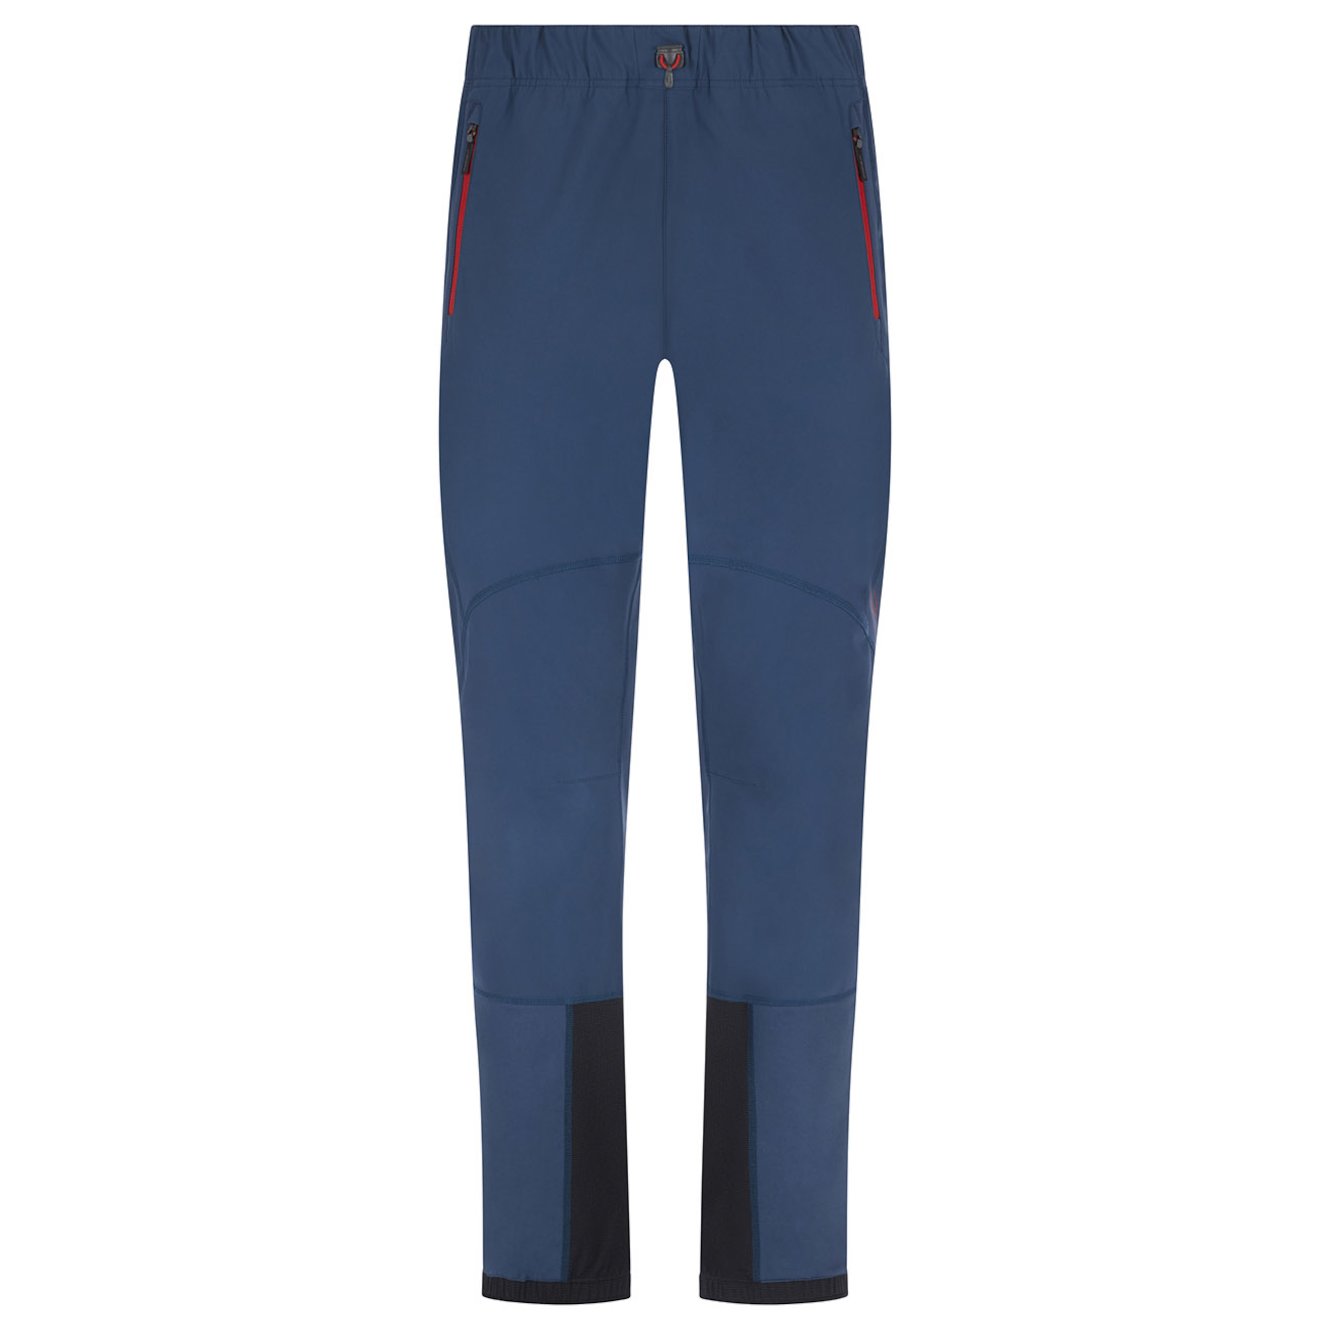 La Sportiva Vanguard Pant - Softshell trousers - Men's